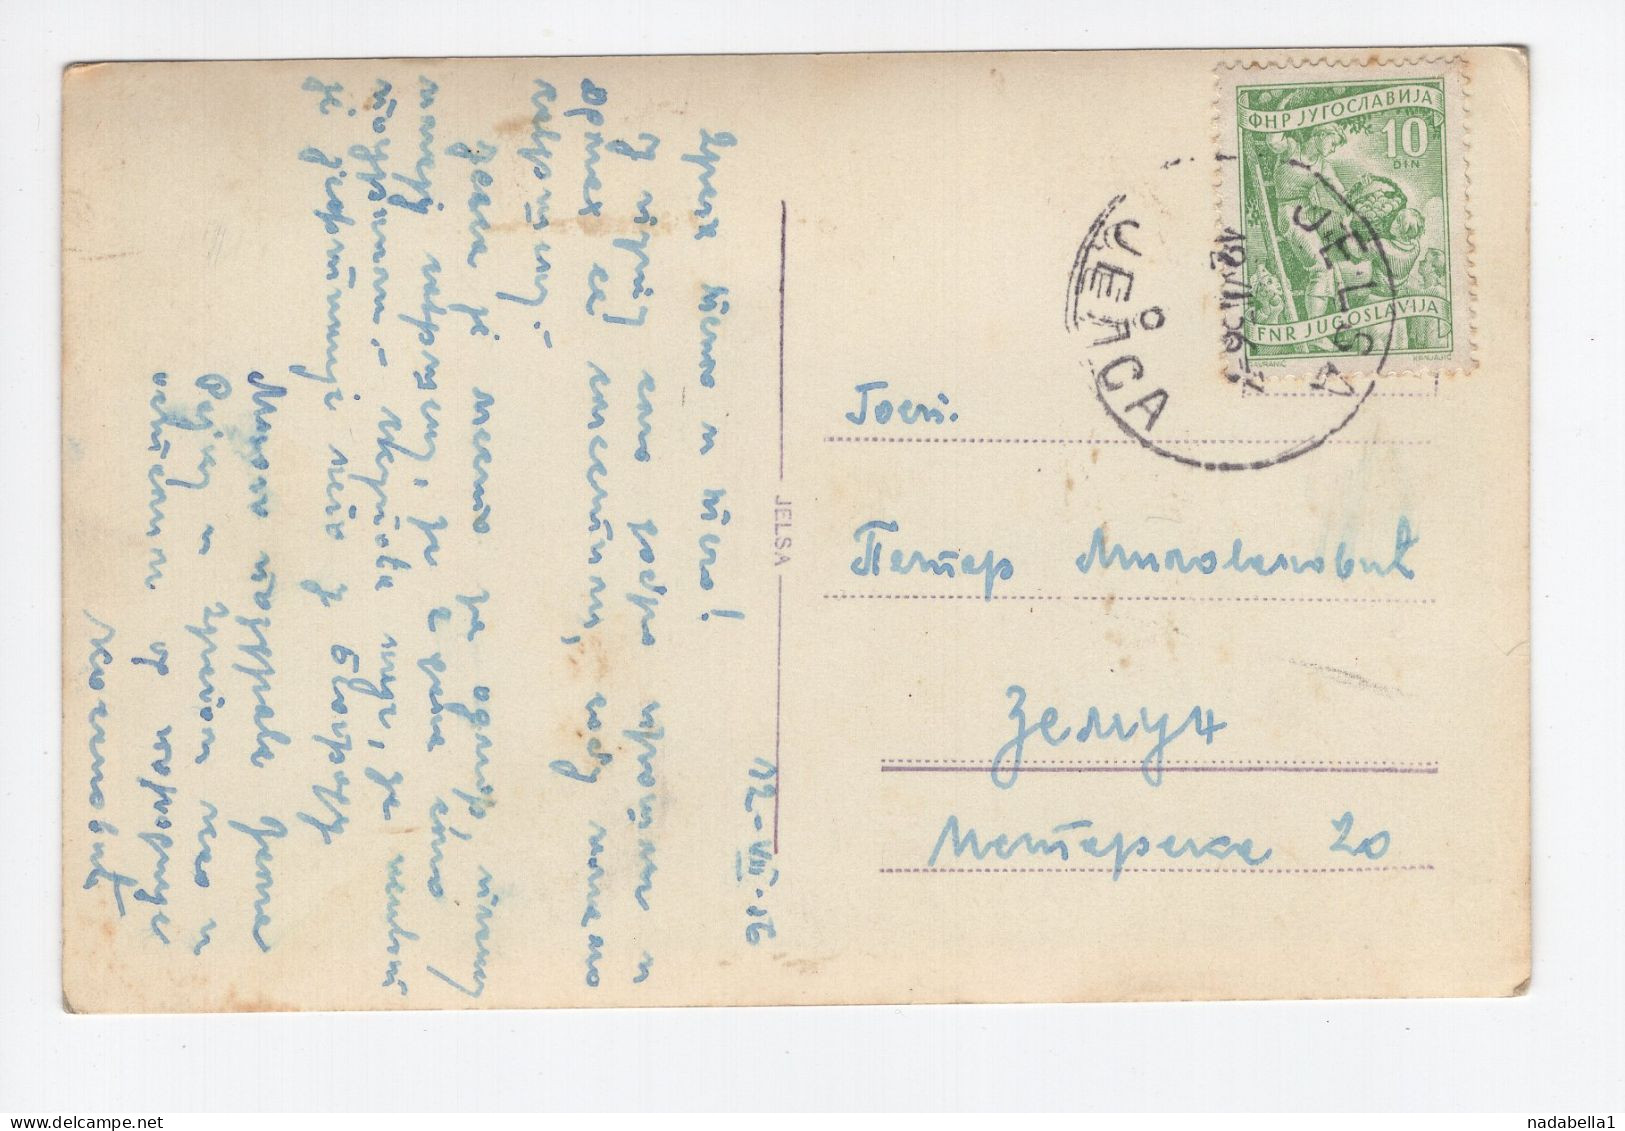 1956. YUGOSLAVIA,CROATIA,JELSA,HVAR ISLAND,POSTCARD,USED - Yougoslavie